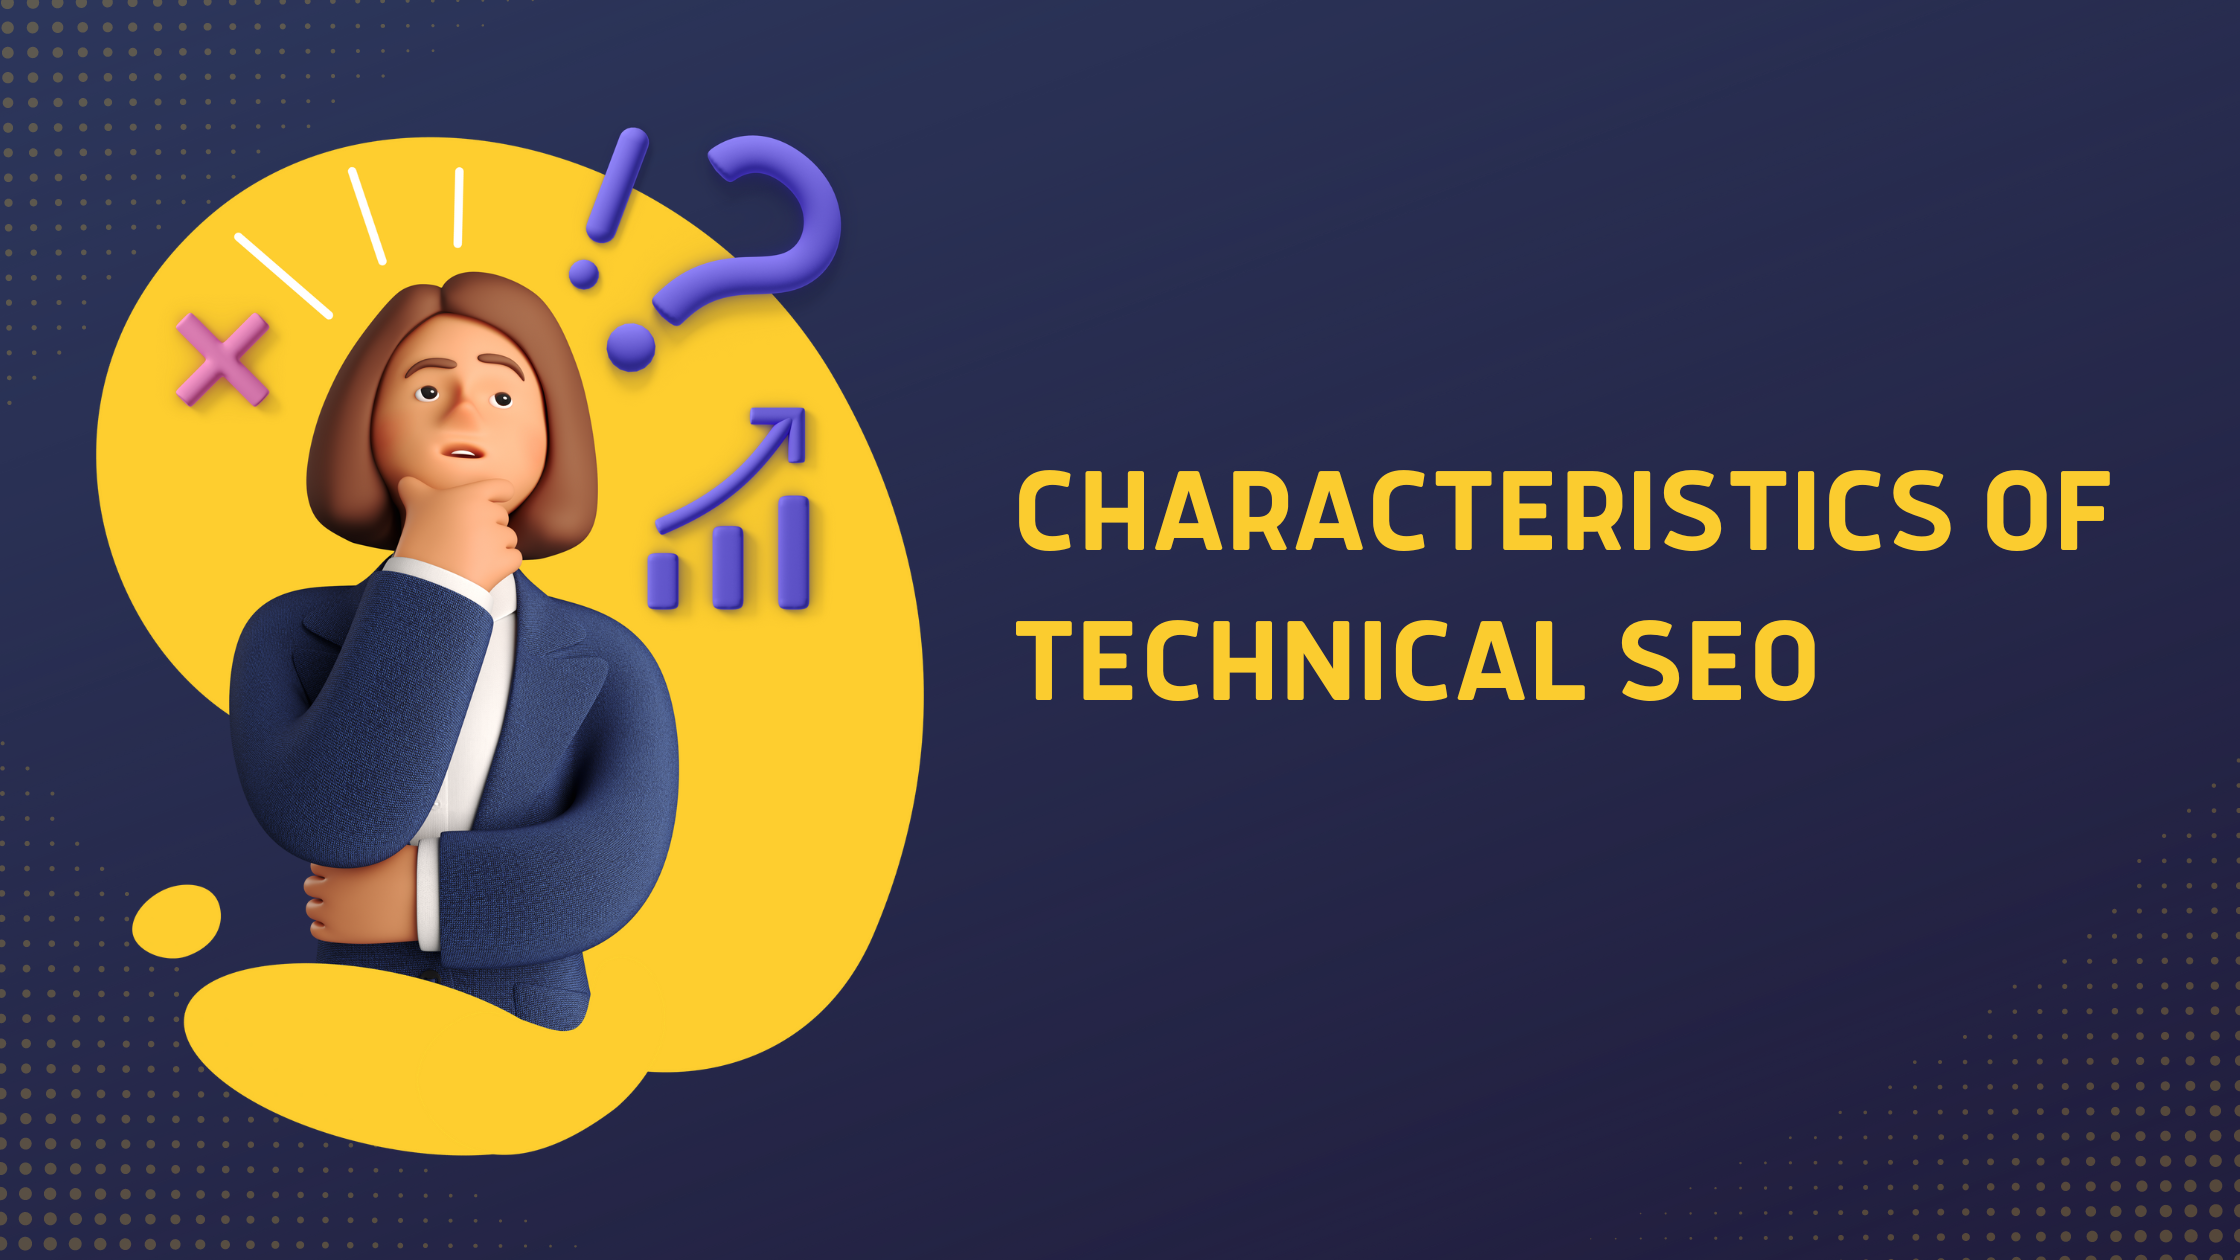 Six major characteristics of a Technical SEO